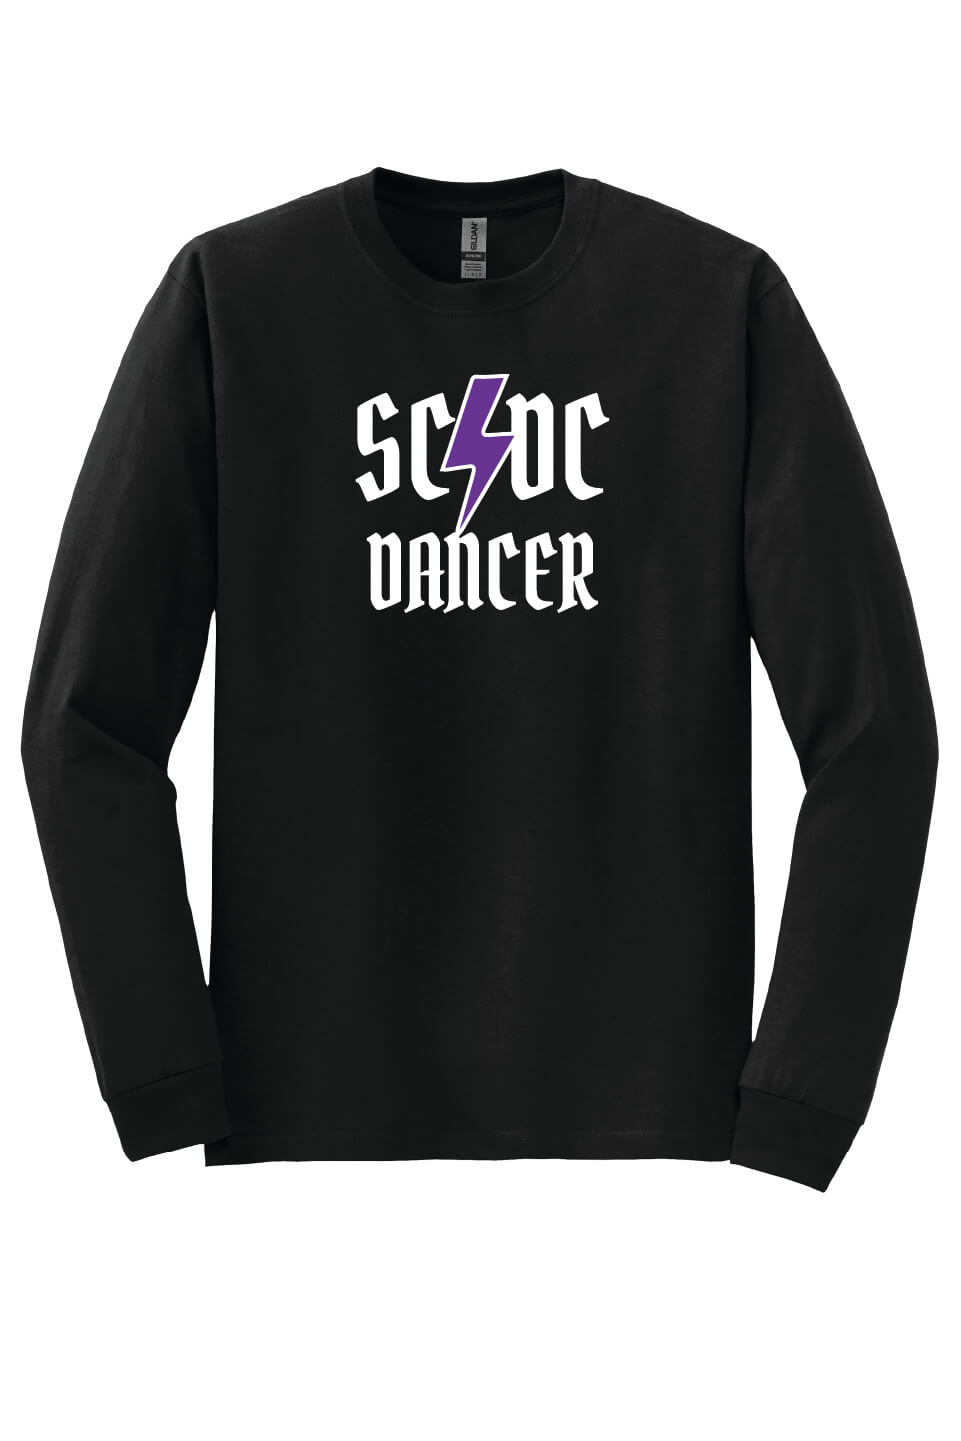 SCDC Dancer Long Sleeve T-Shirt (Youth) black